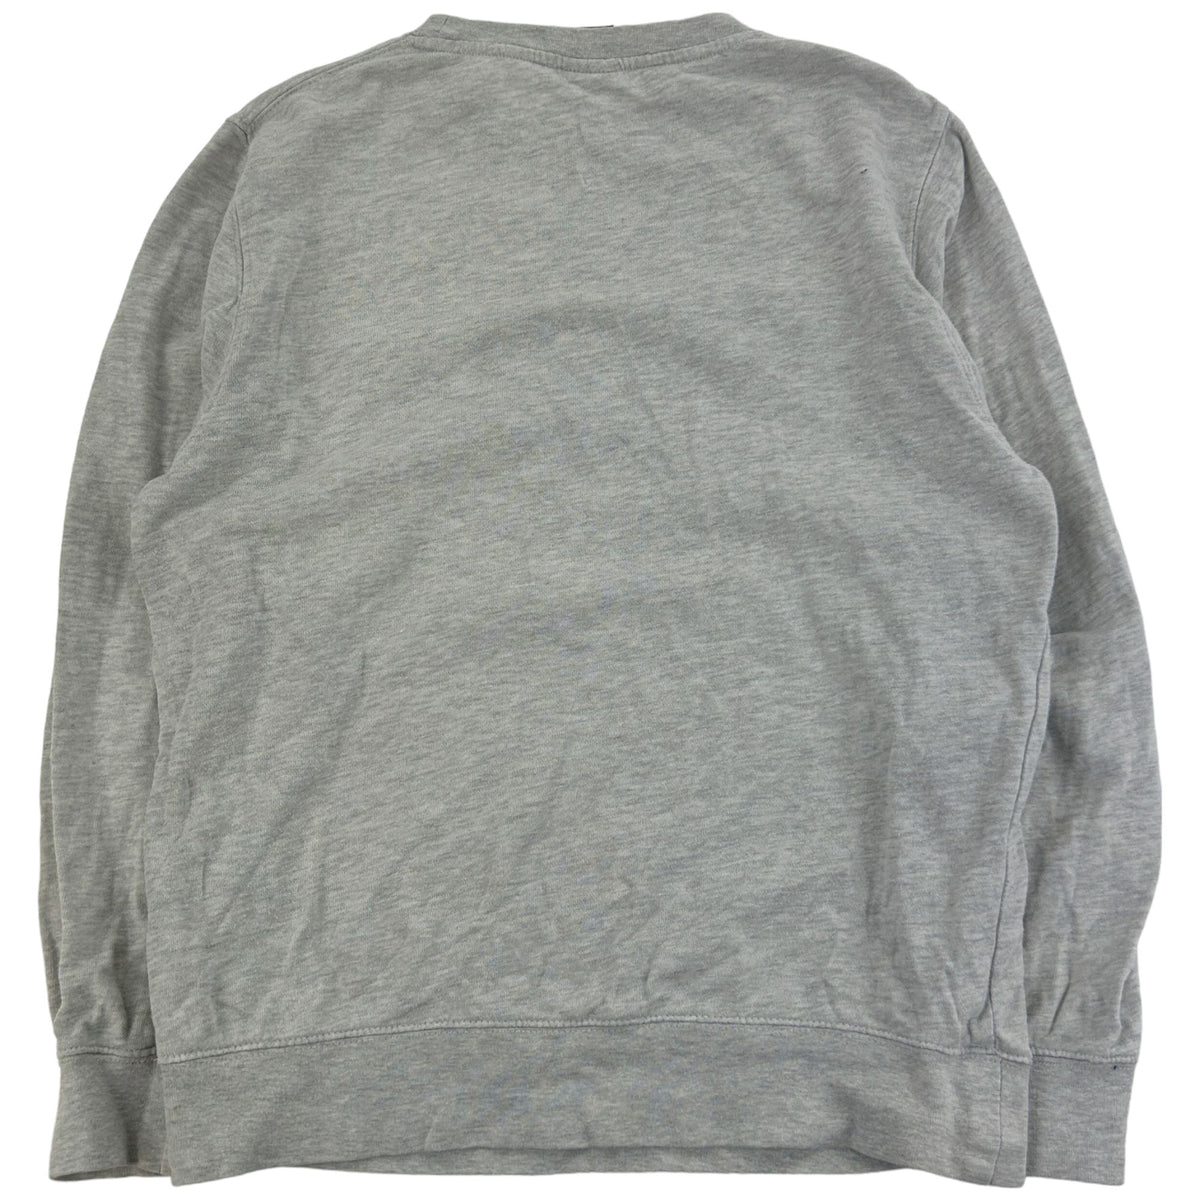 Stussy Crewneck Sweatshirt Size S